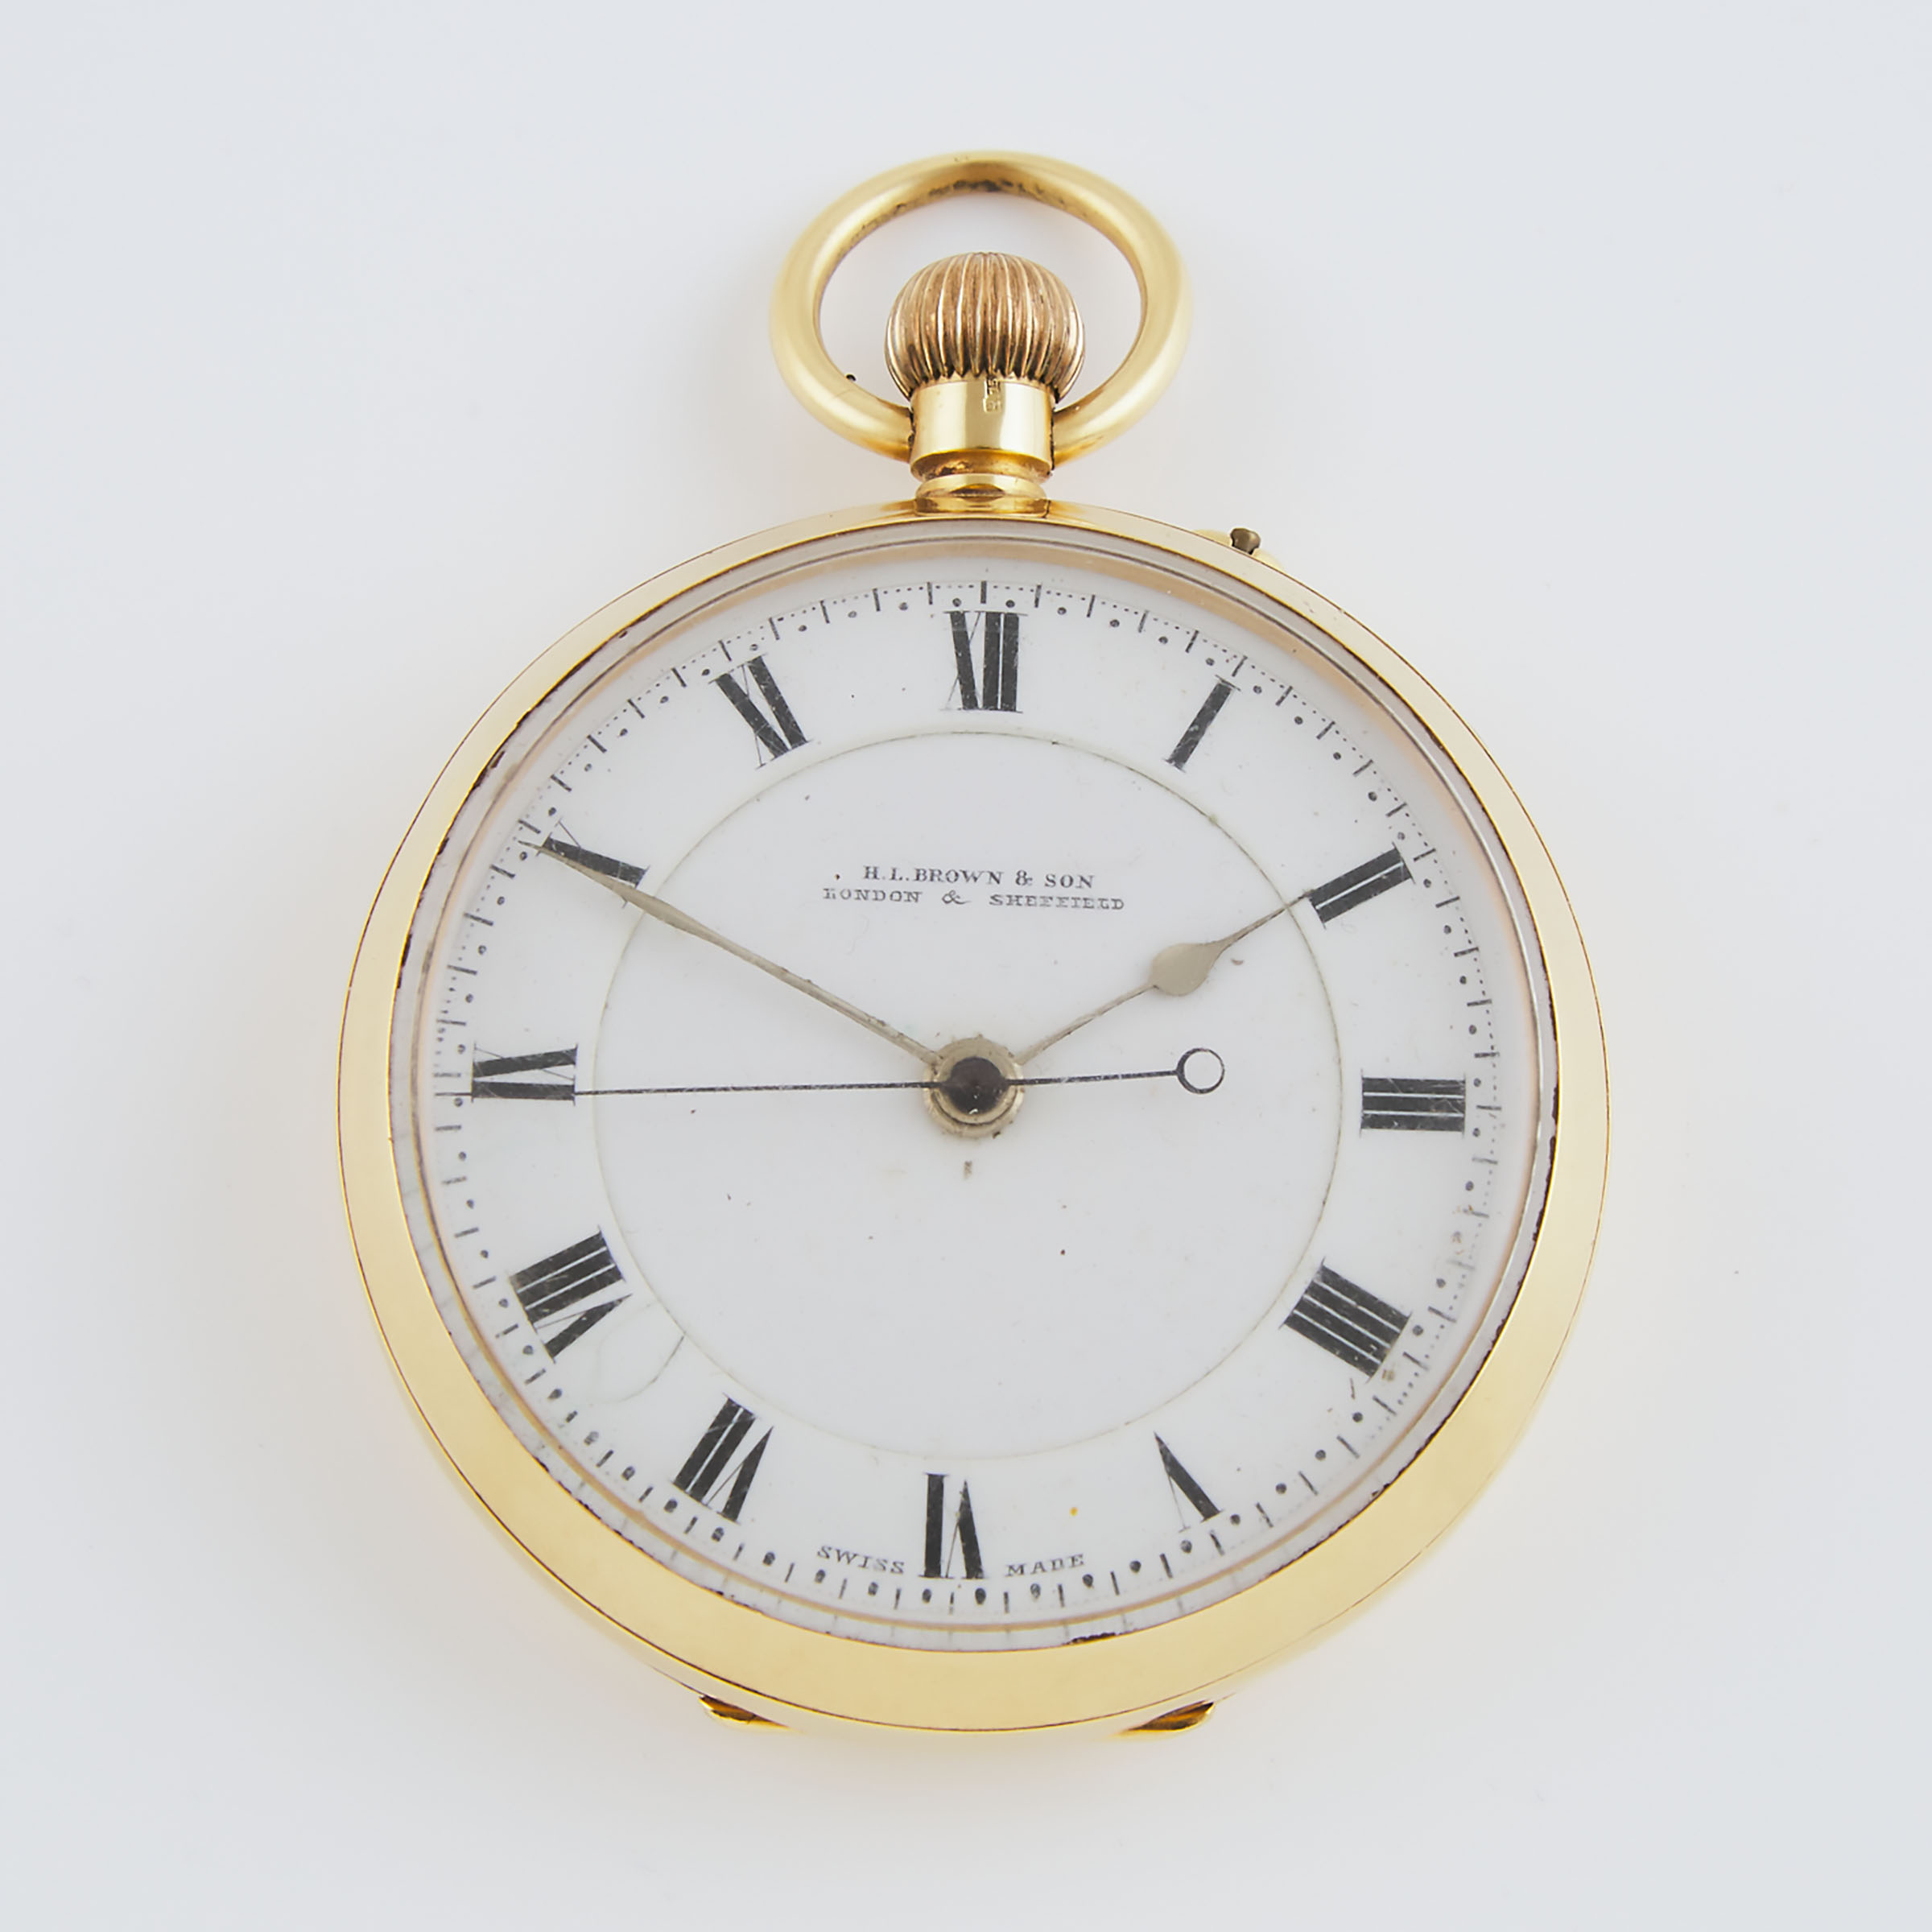 H.L.Brown & Sons Of London & Sheffield Openface Stem Wind Stop/Start Chronograph Pocket Watch